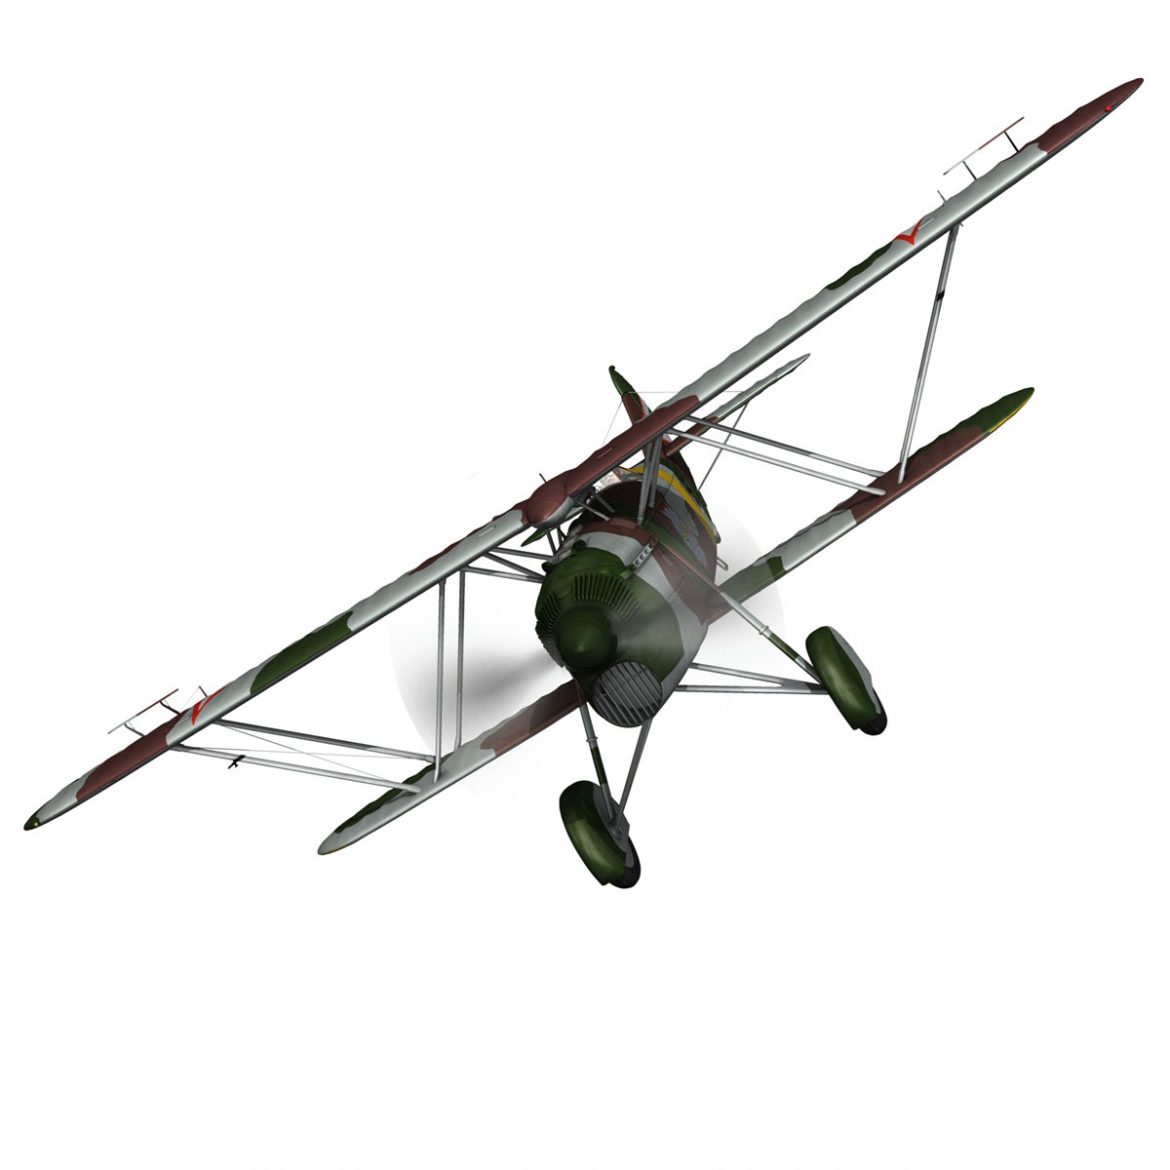 fiat cr.32 – hungarian royal air force – v159 3d model fbx c4d lwo obj 299961